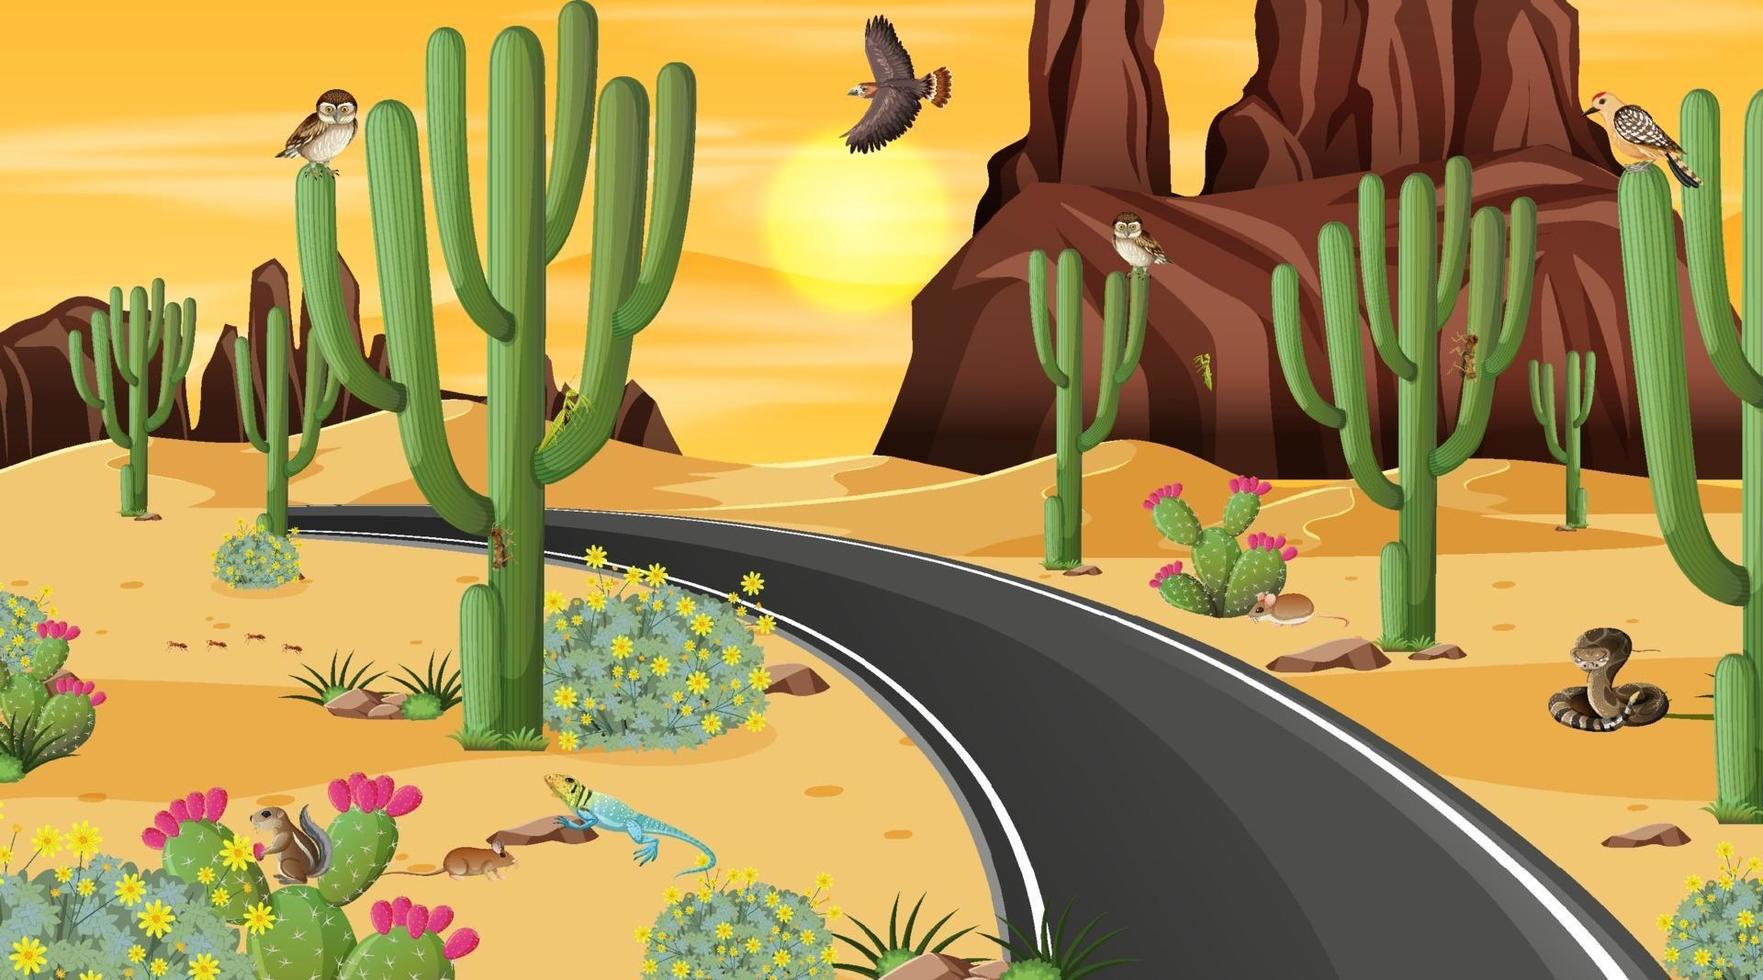 Road through the desert forest landscape scene with desert animals vector